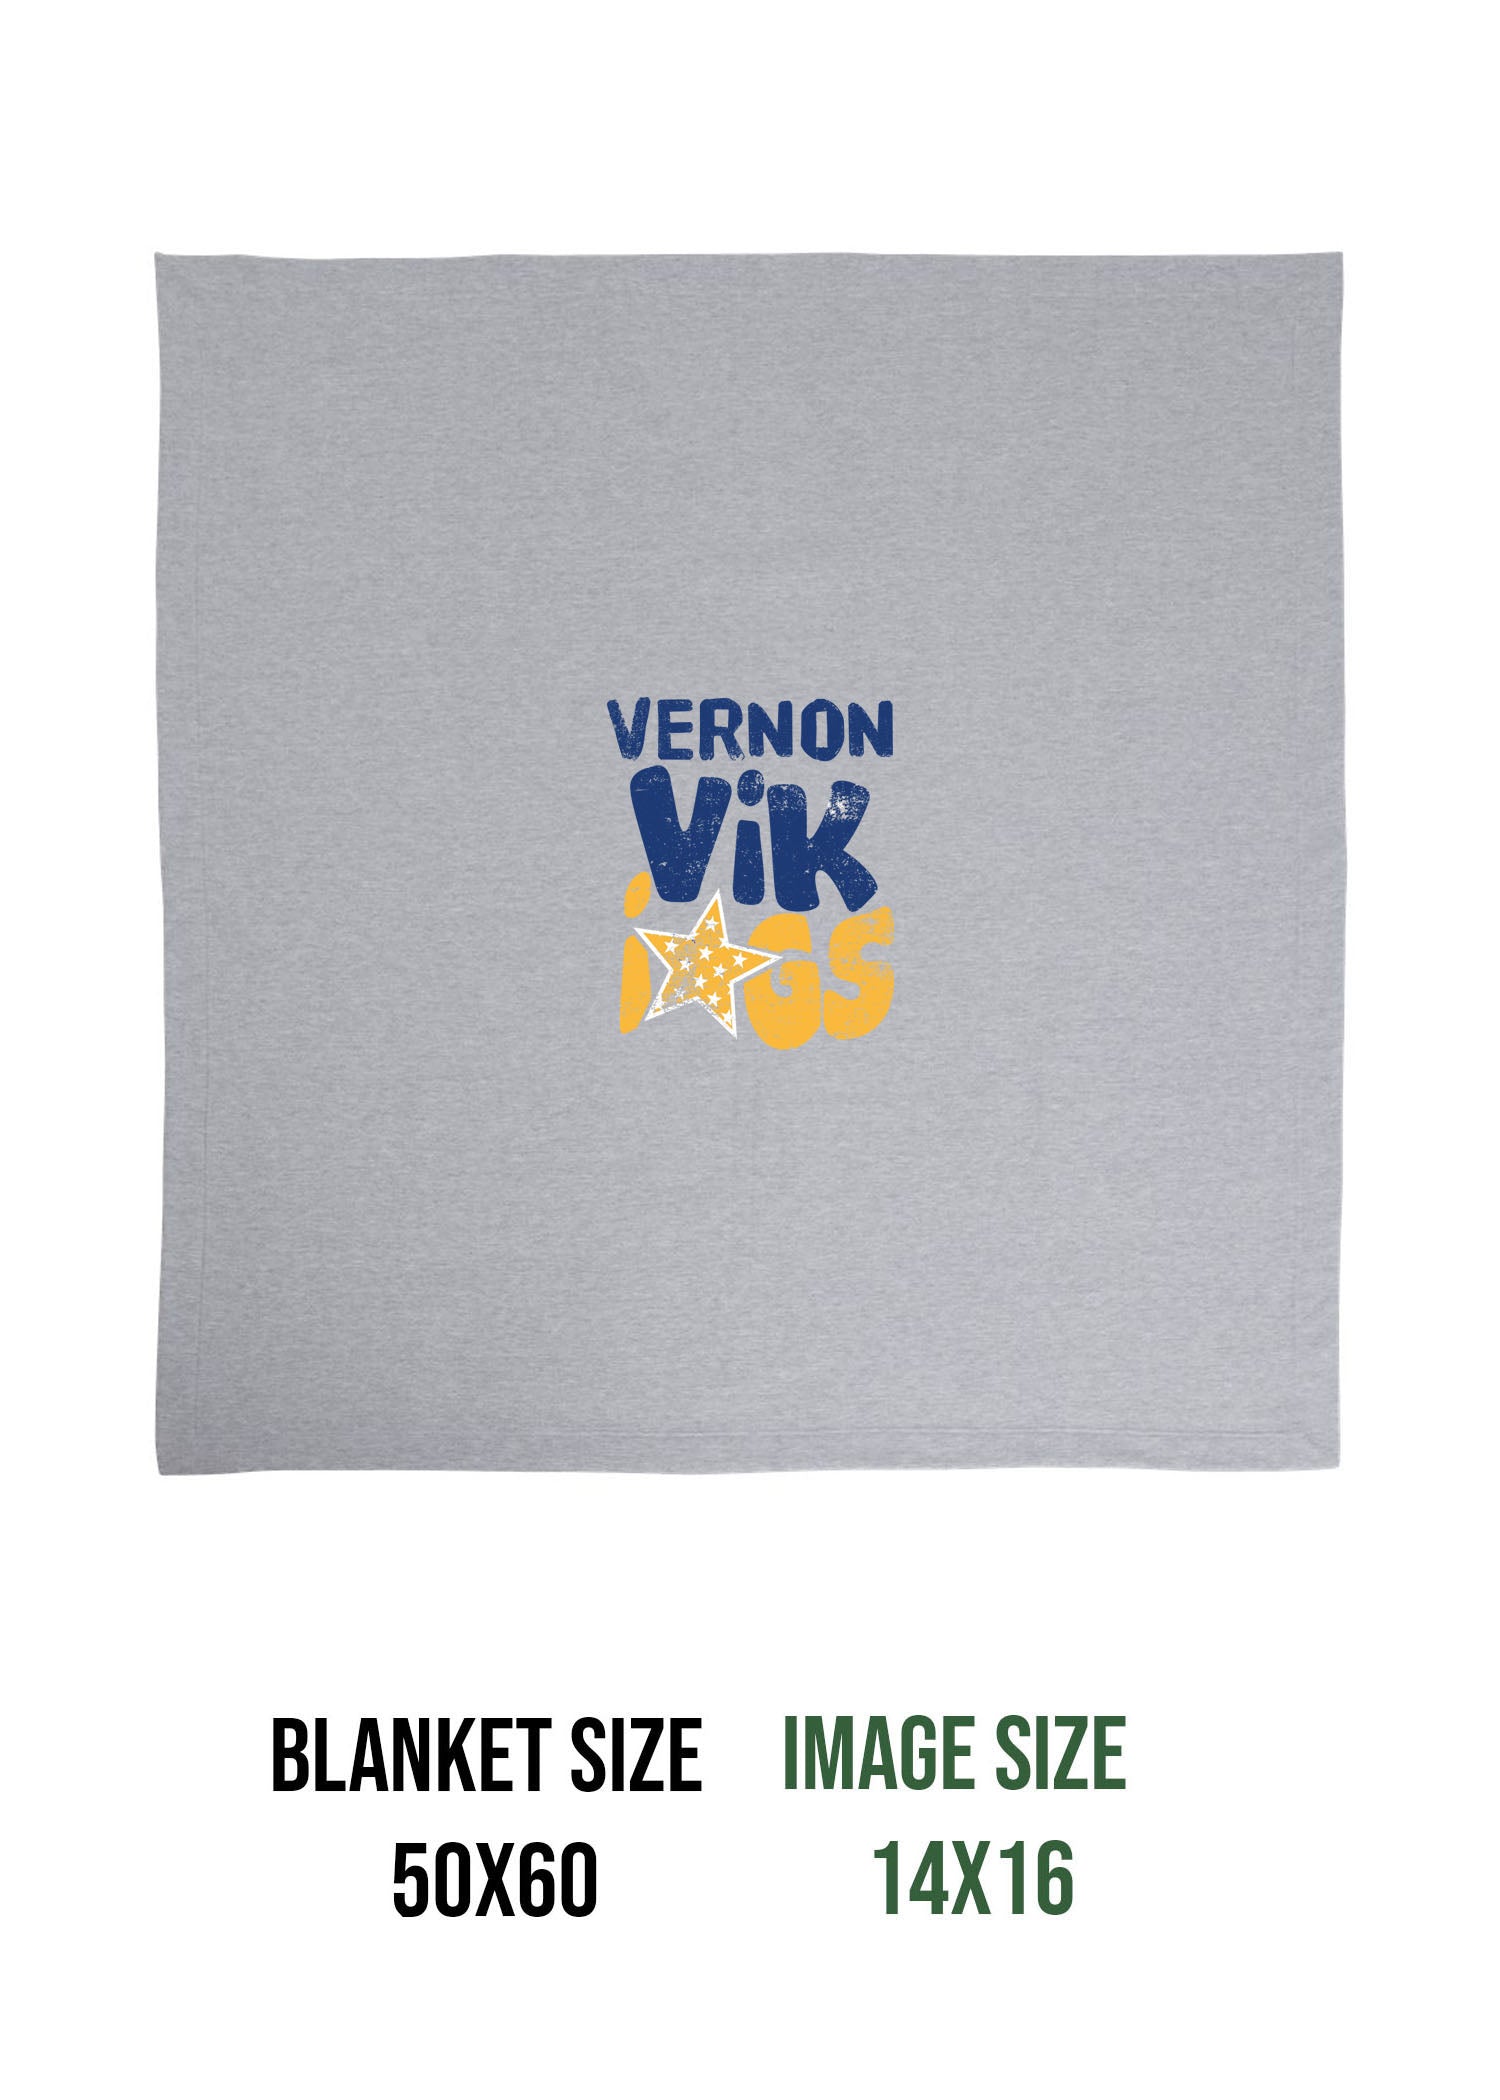 Vernon Design 14 Blanket